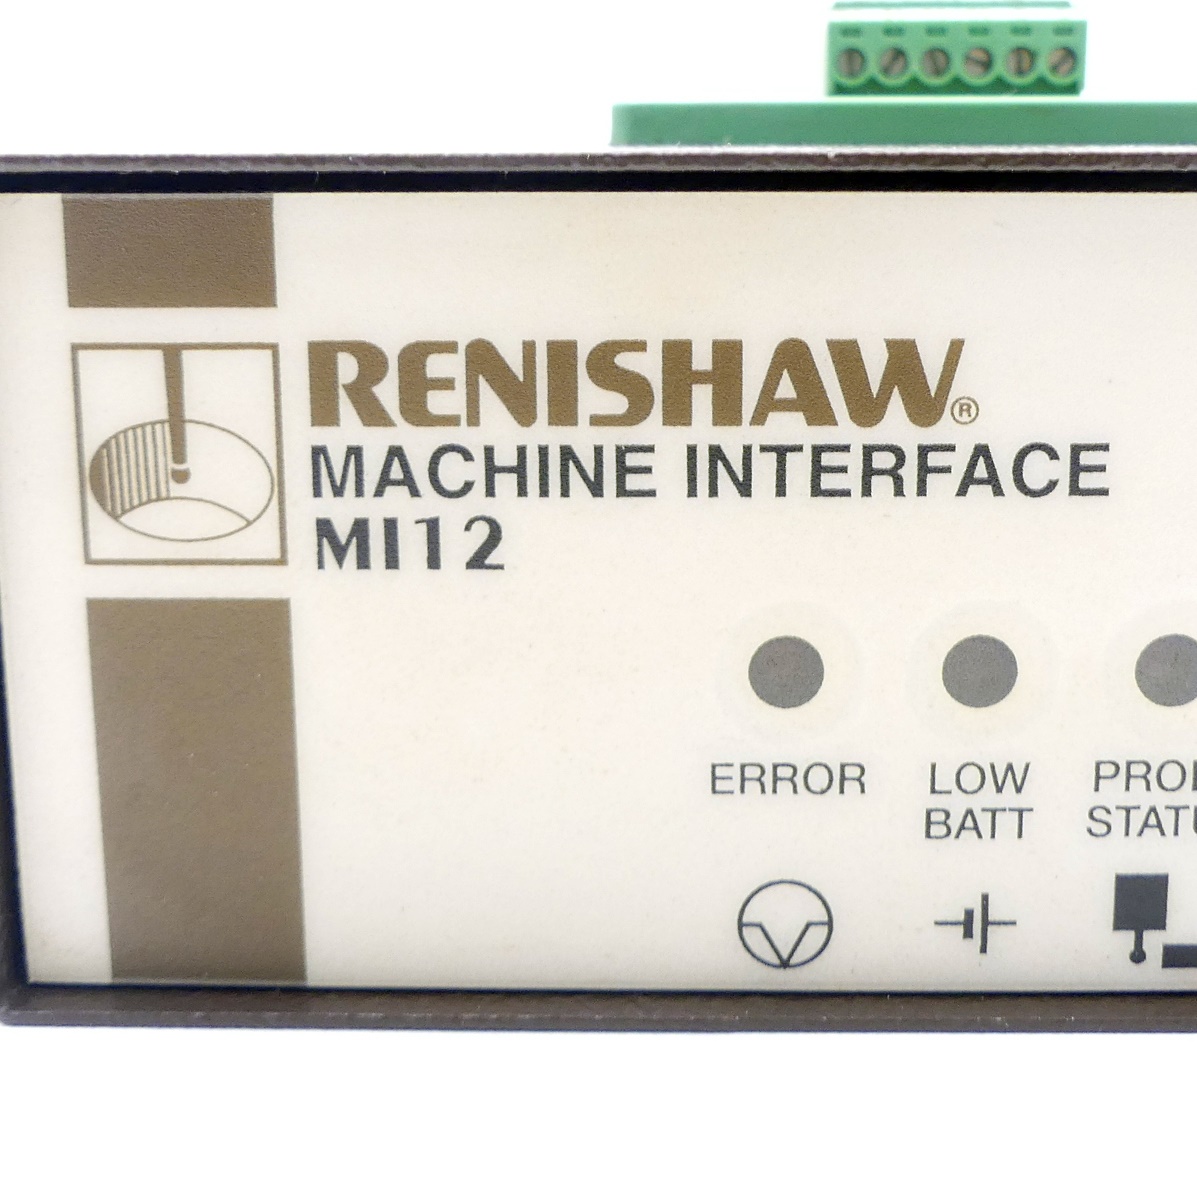 Machine Interface MI12 